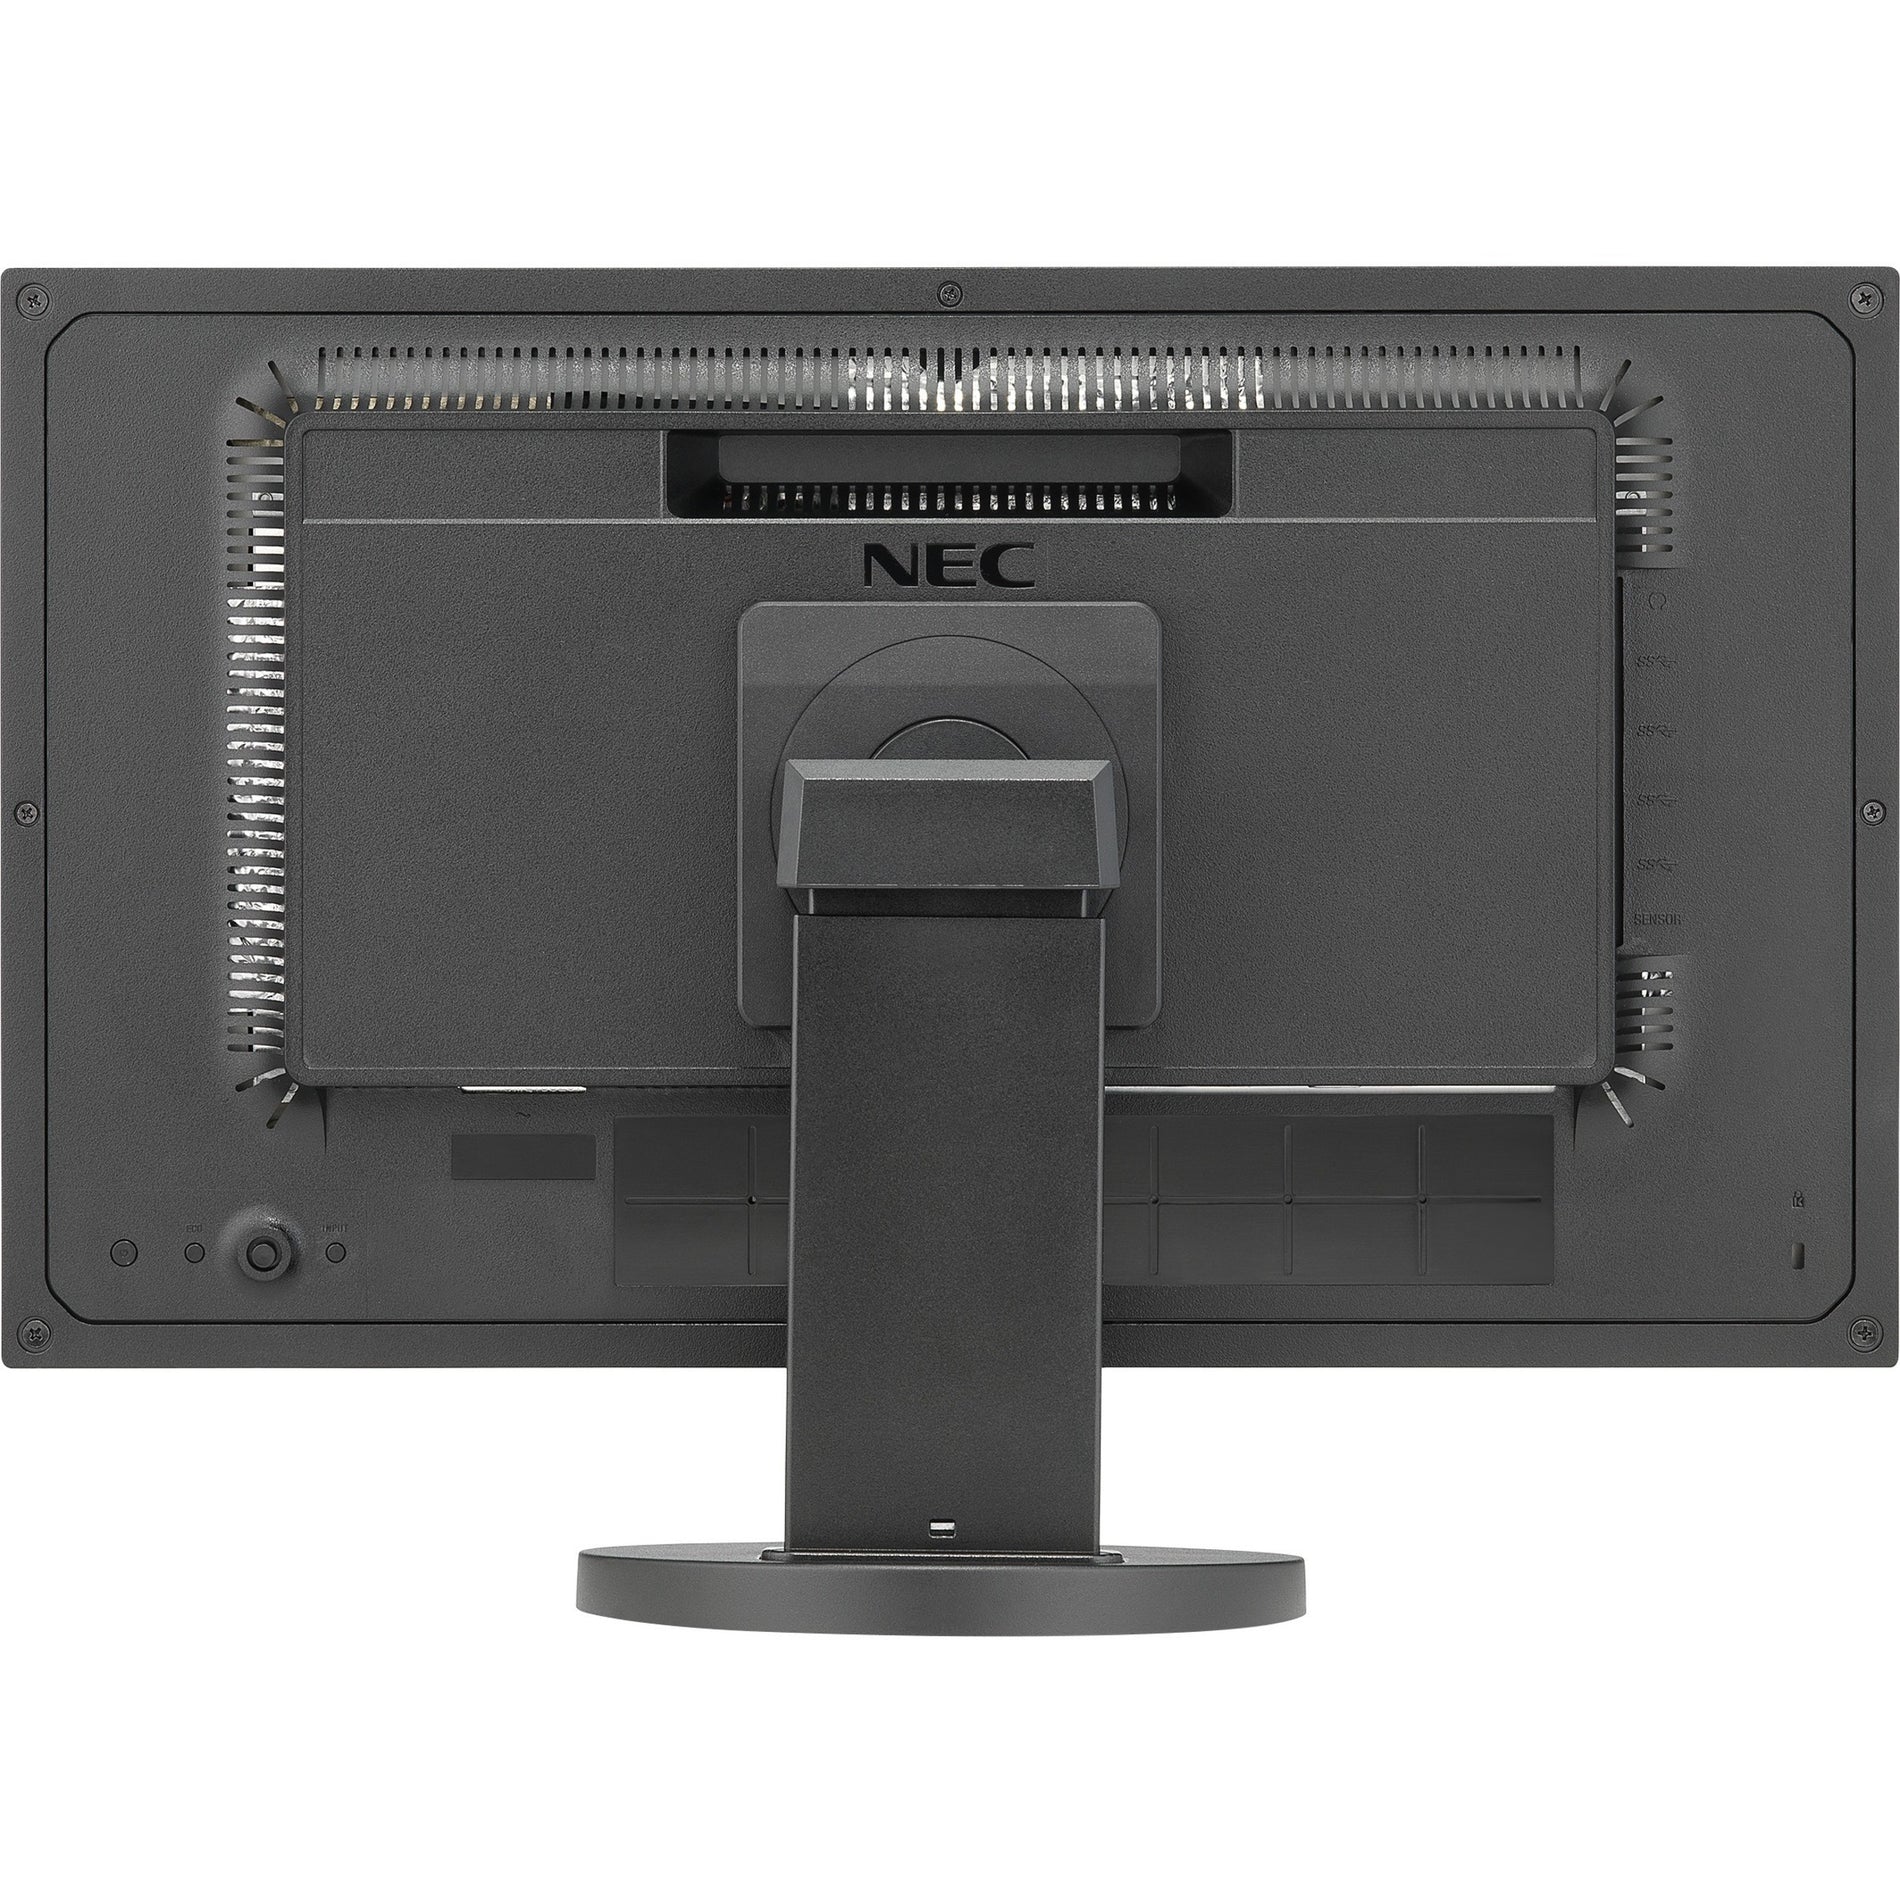 NEC Display EX241UN-BK-SV MultiSync 24IN Full HD IPS Desktop Monitor, SpectraViewII, 250 Nit Brightness, 5,000:1 Contrast Ratio, 1920 x 1080 Resolution